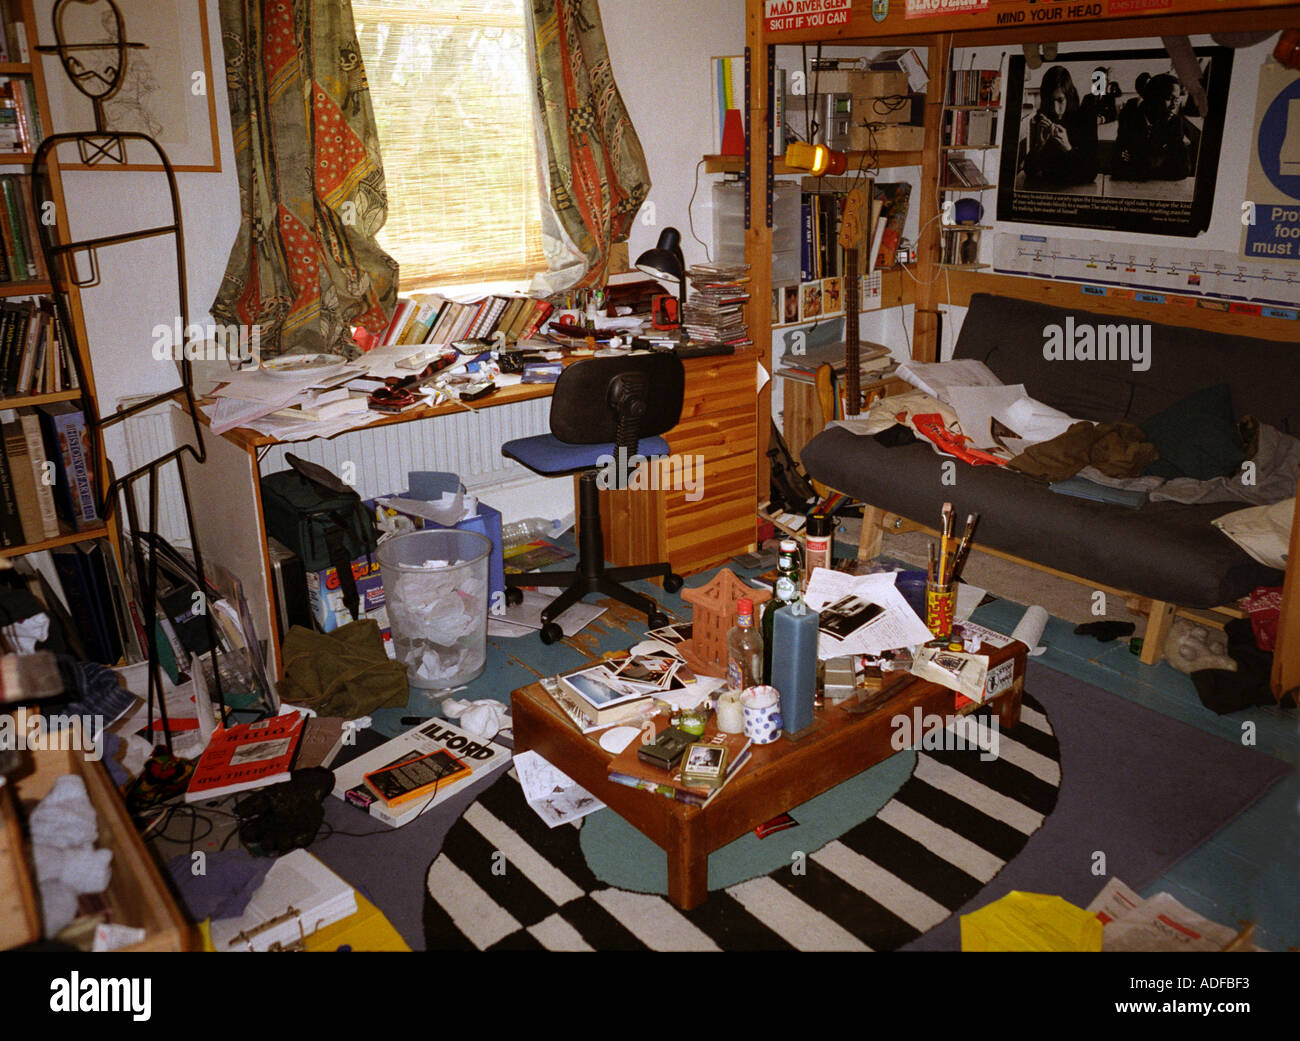 Extremely Messy Teenage Bedroom Stock Photo 916467 Alamy